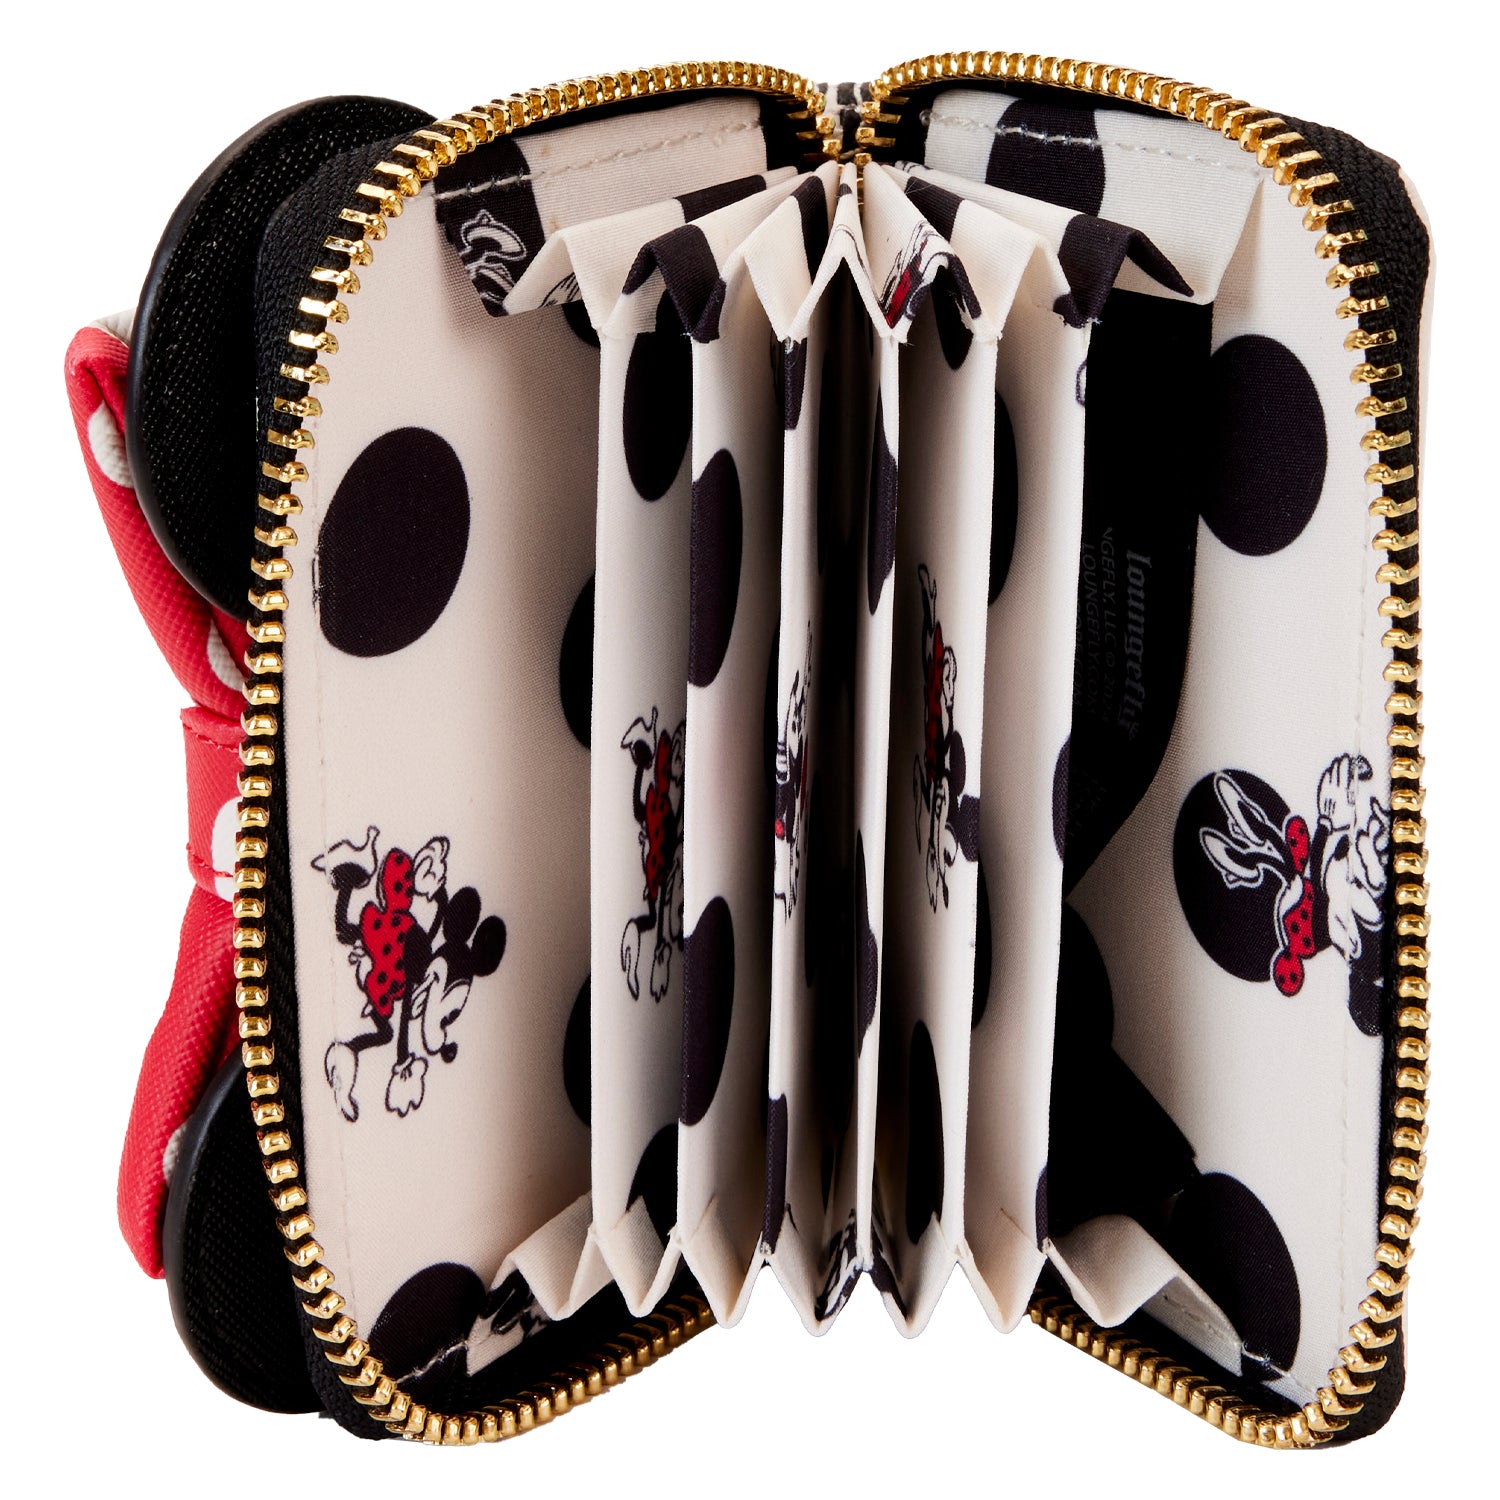 Minnie Mouse Disney Loungefly Purse Satchel - Women's handbags